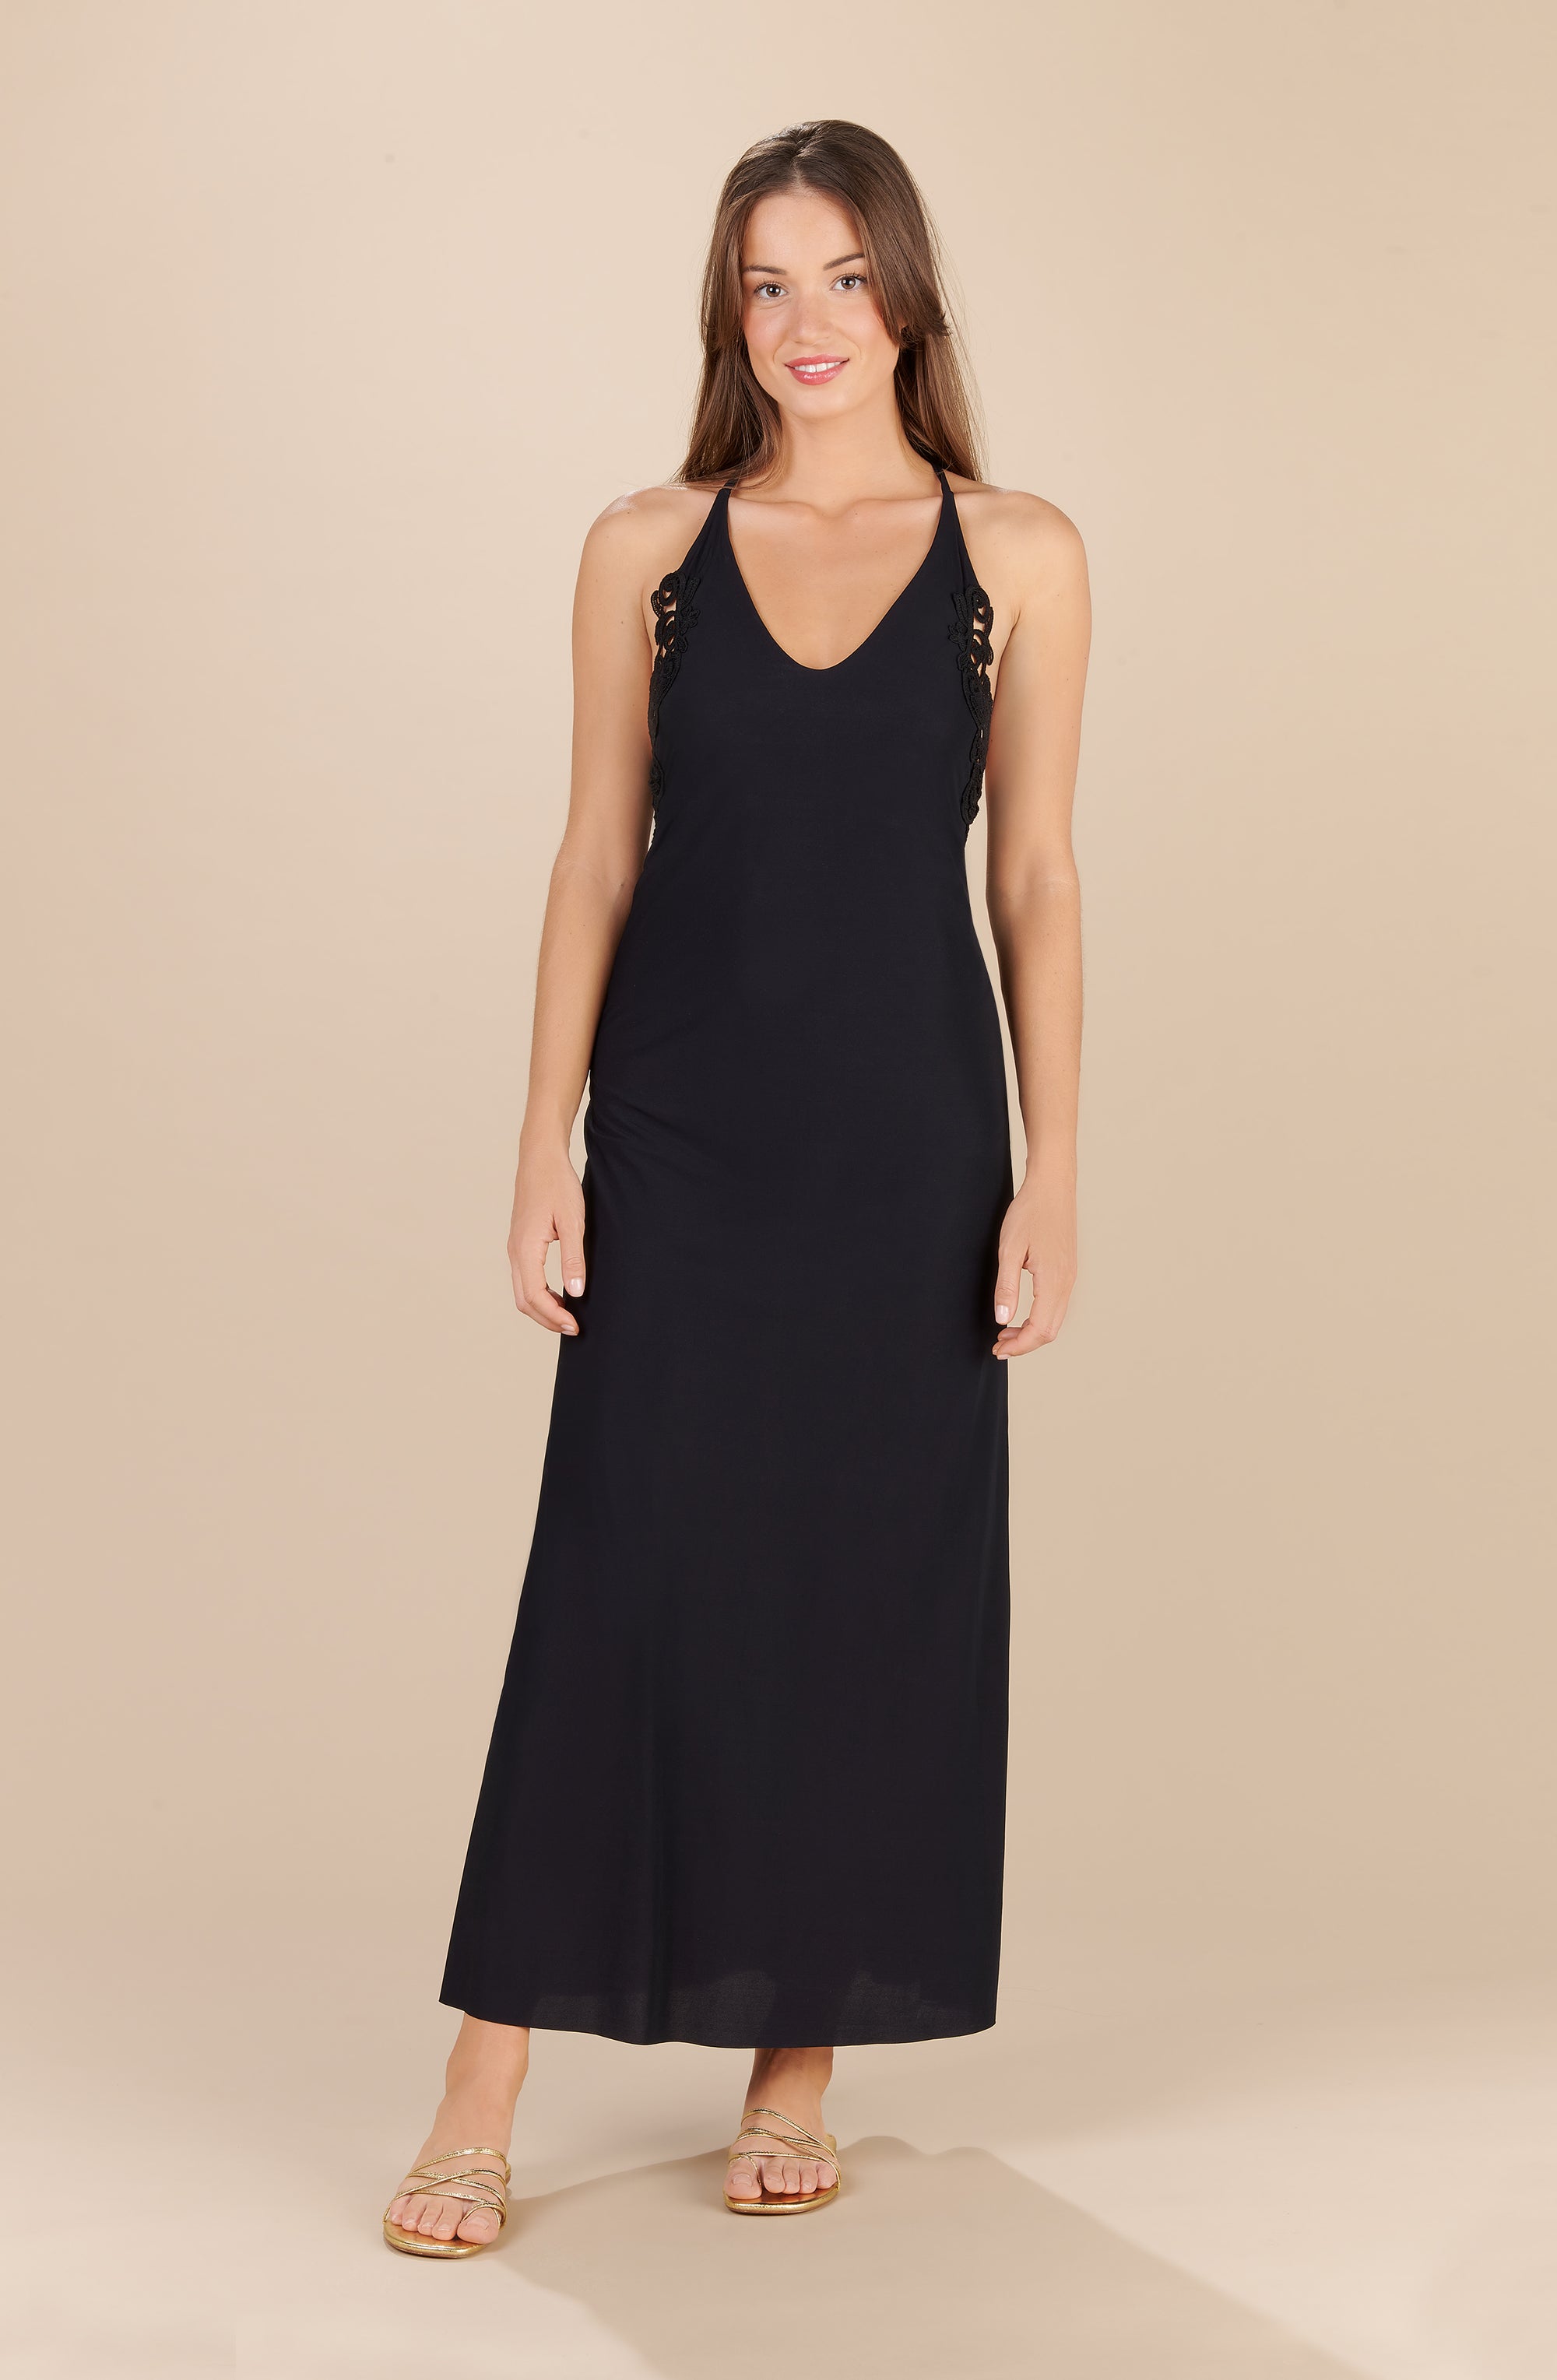 rowan - Long black halter neck dress